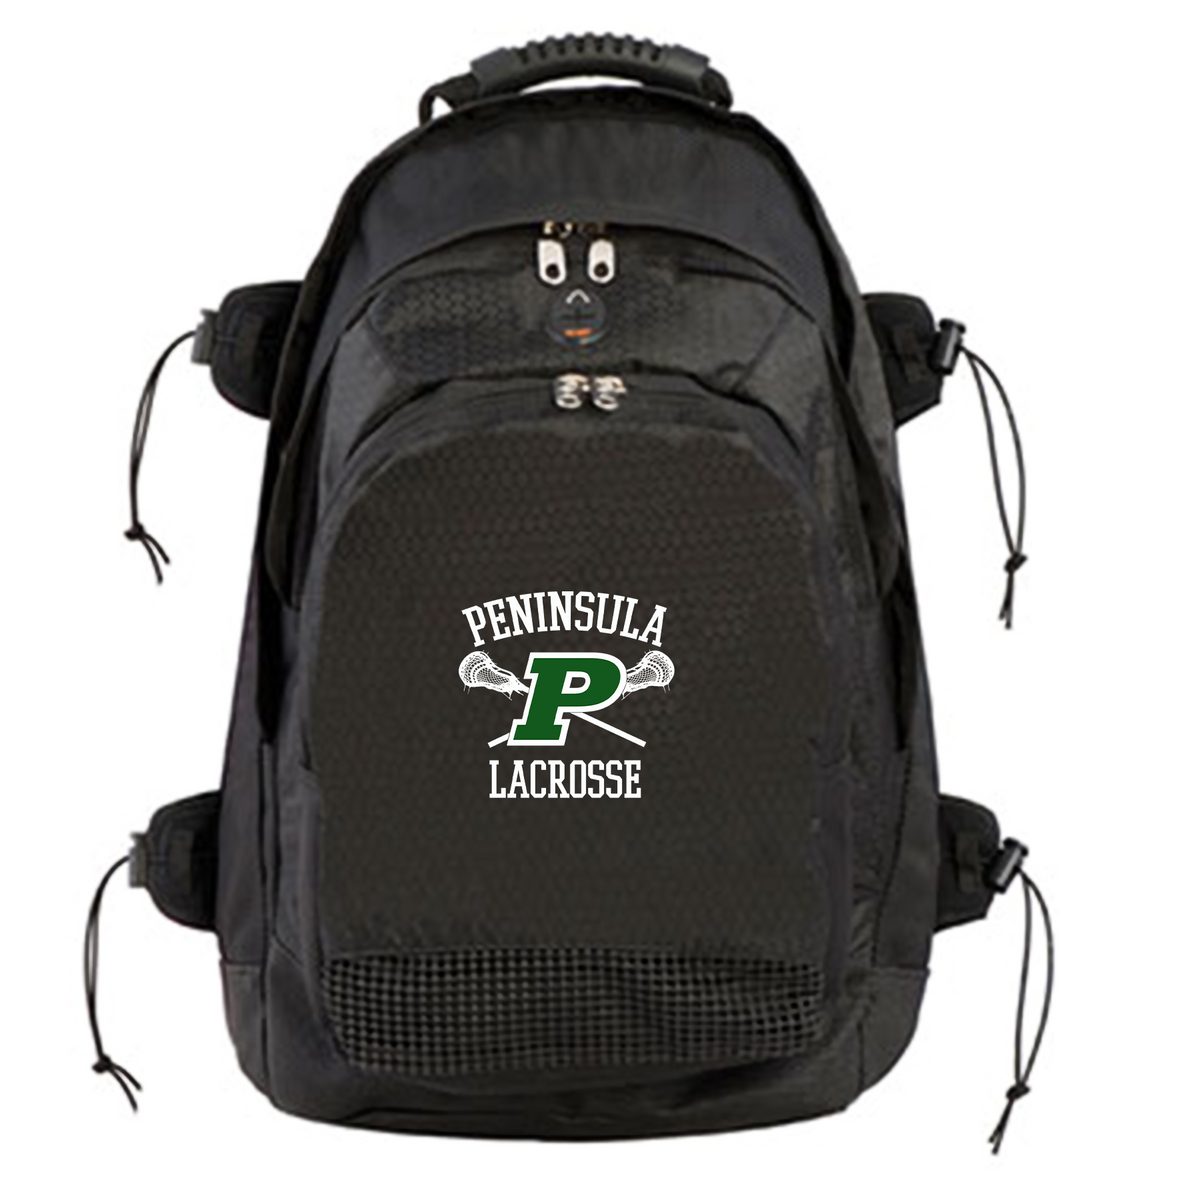 Peninsula Lacrosse Deluxe Sports Backpack